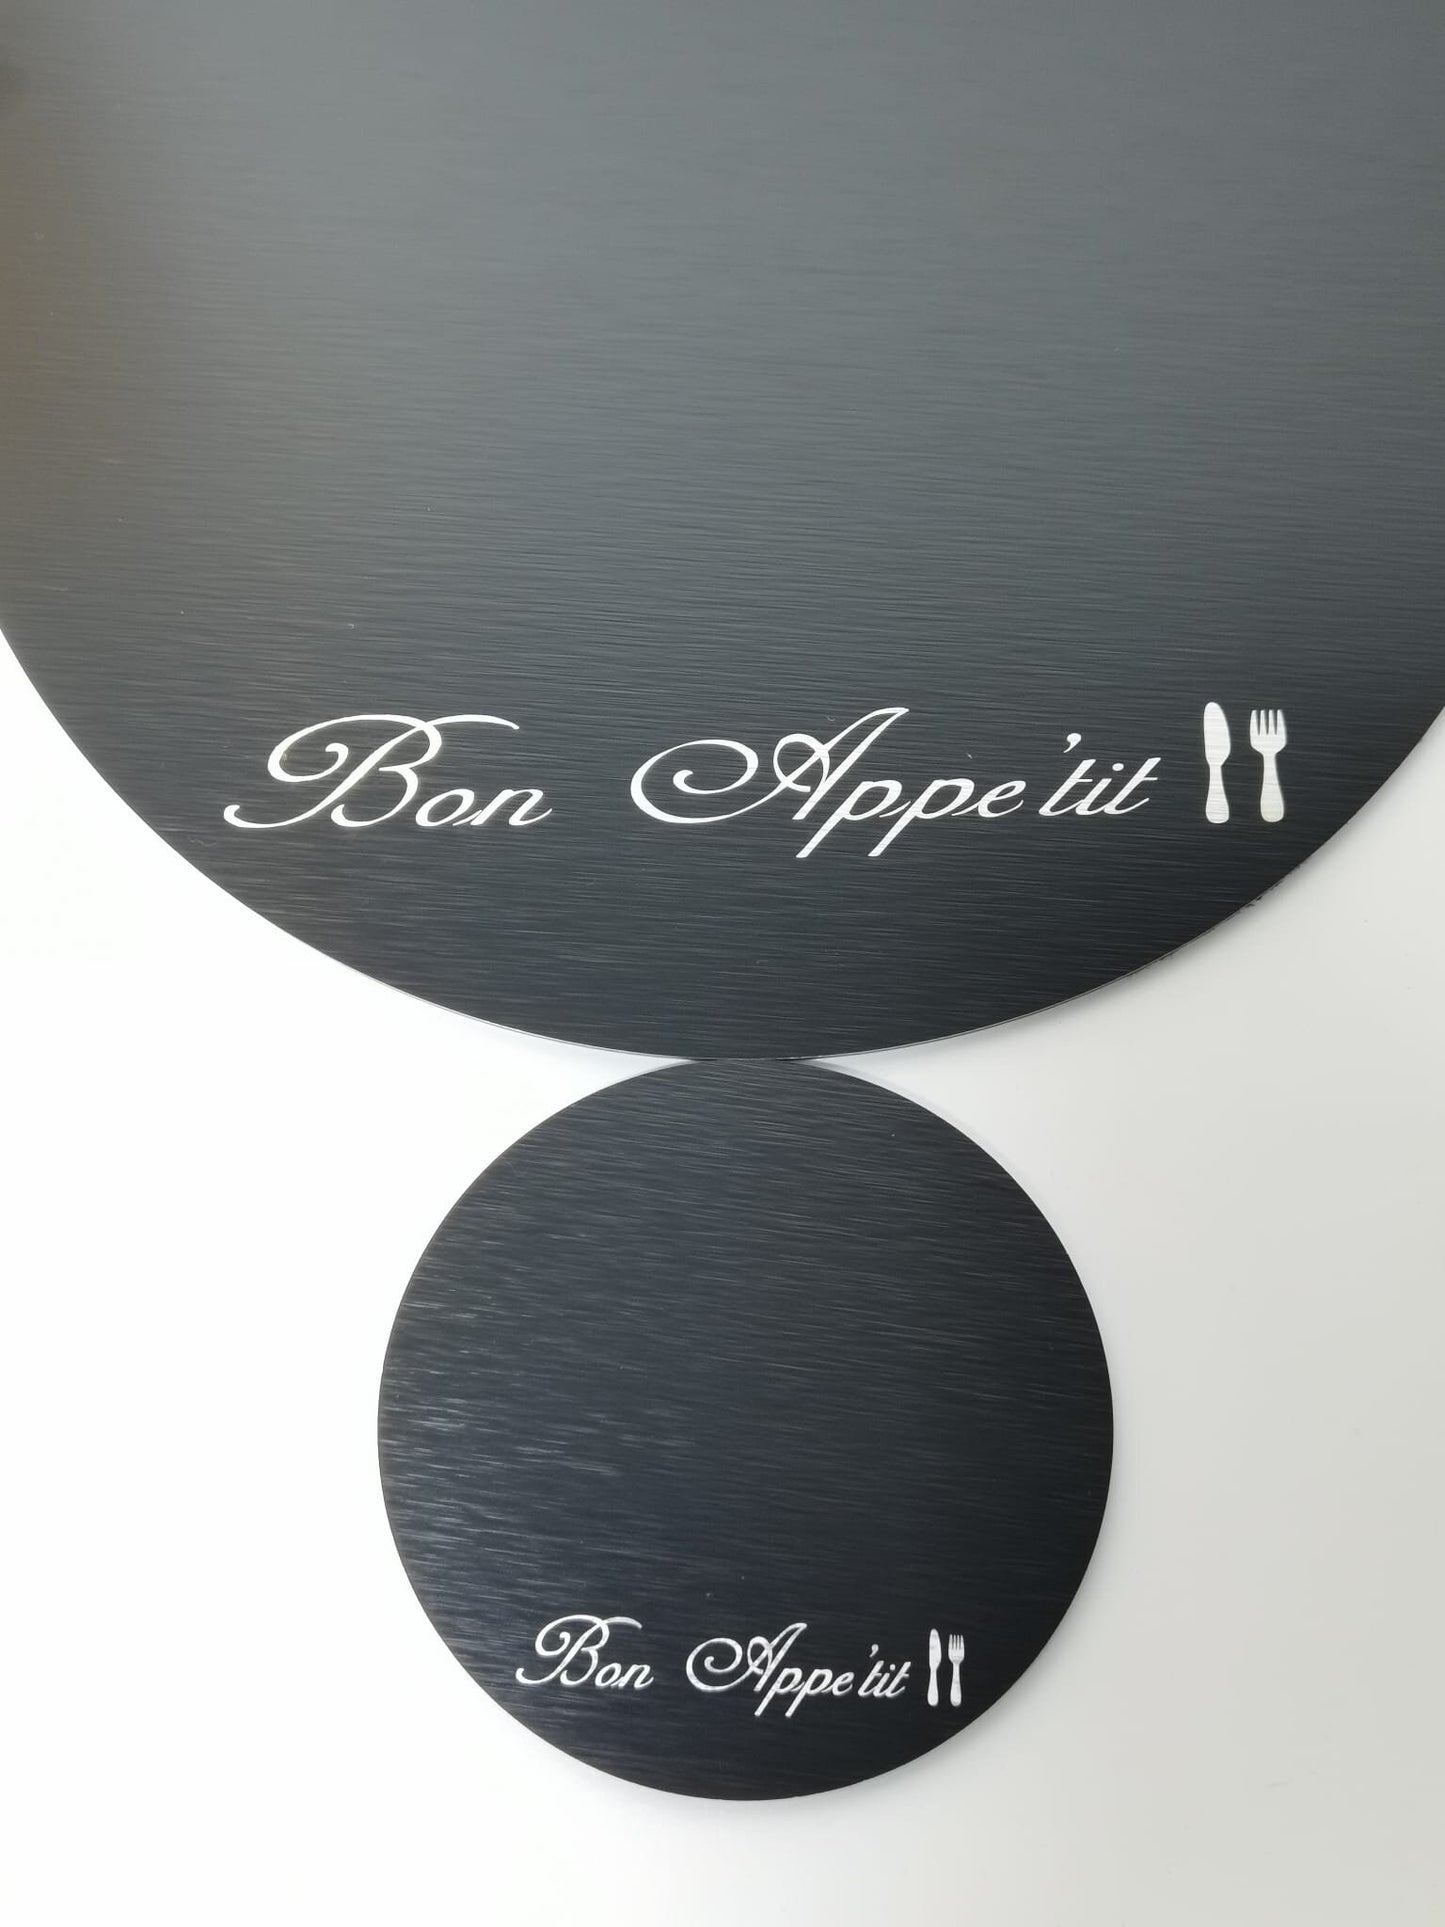 Personalised Engraved Aluminium Placemats/Coaster sets